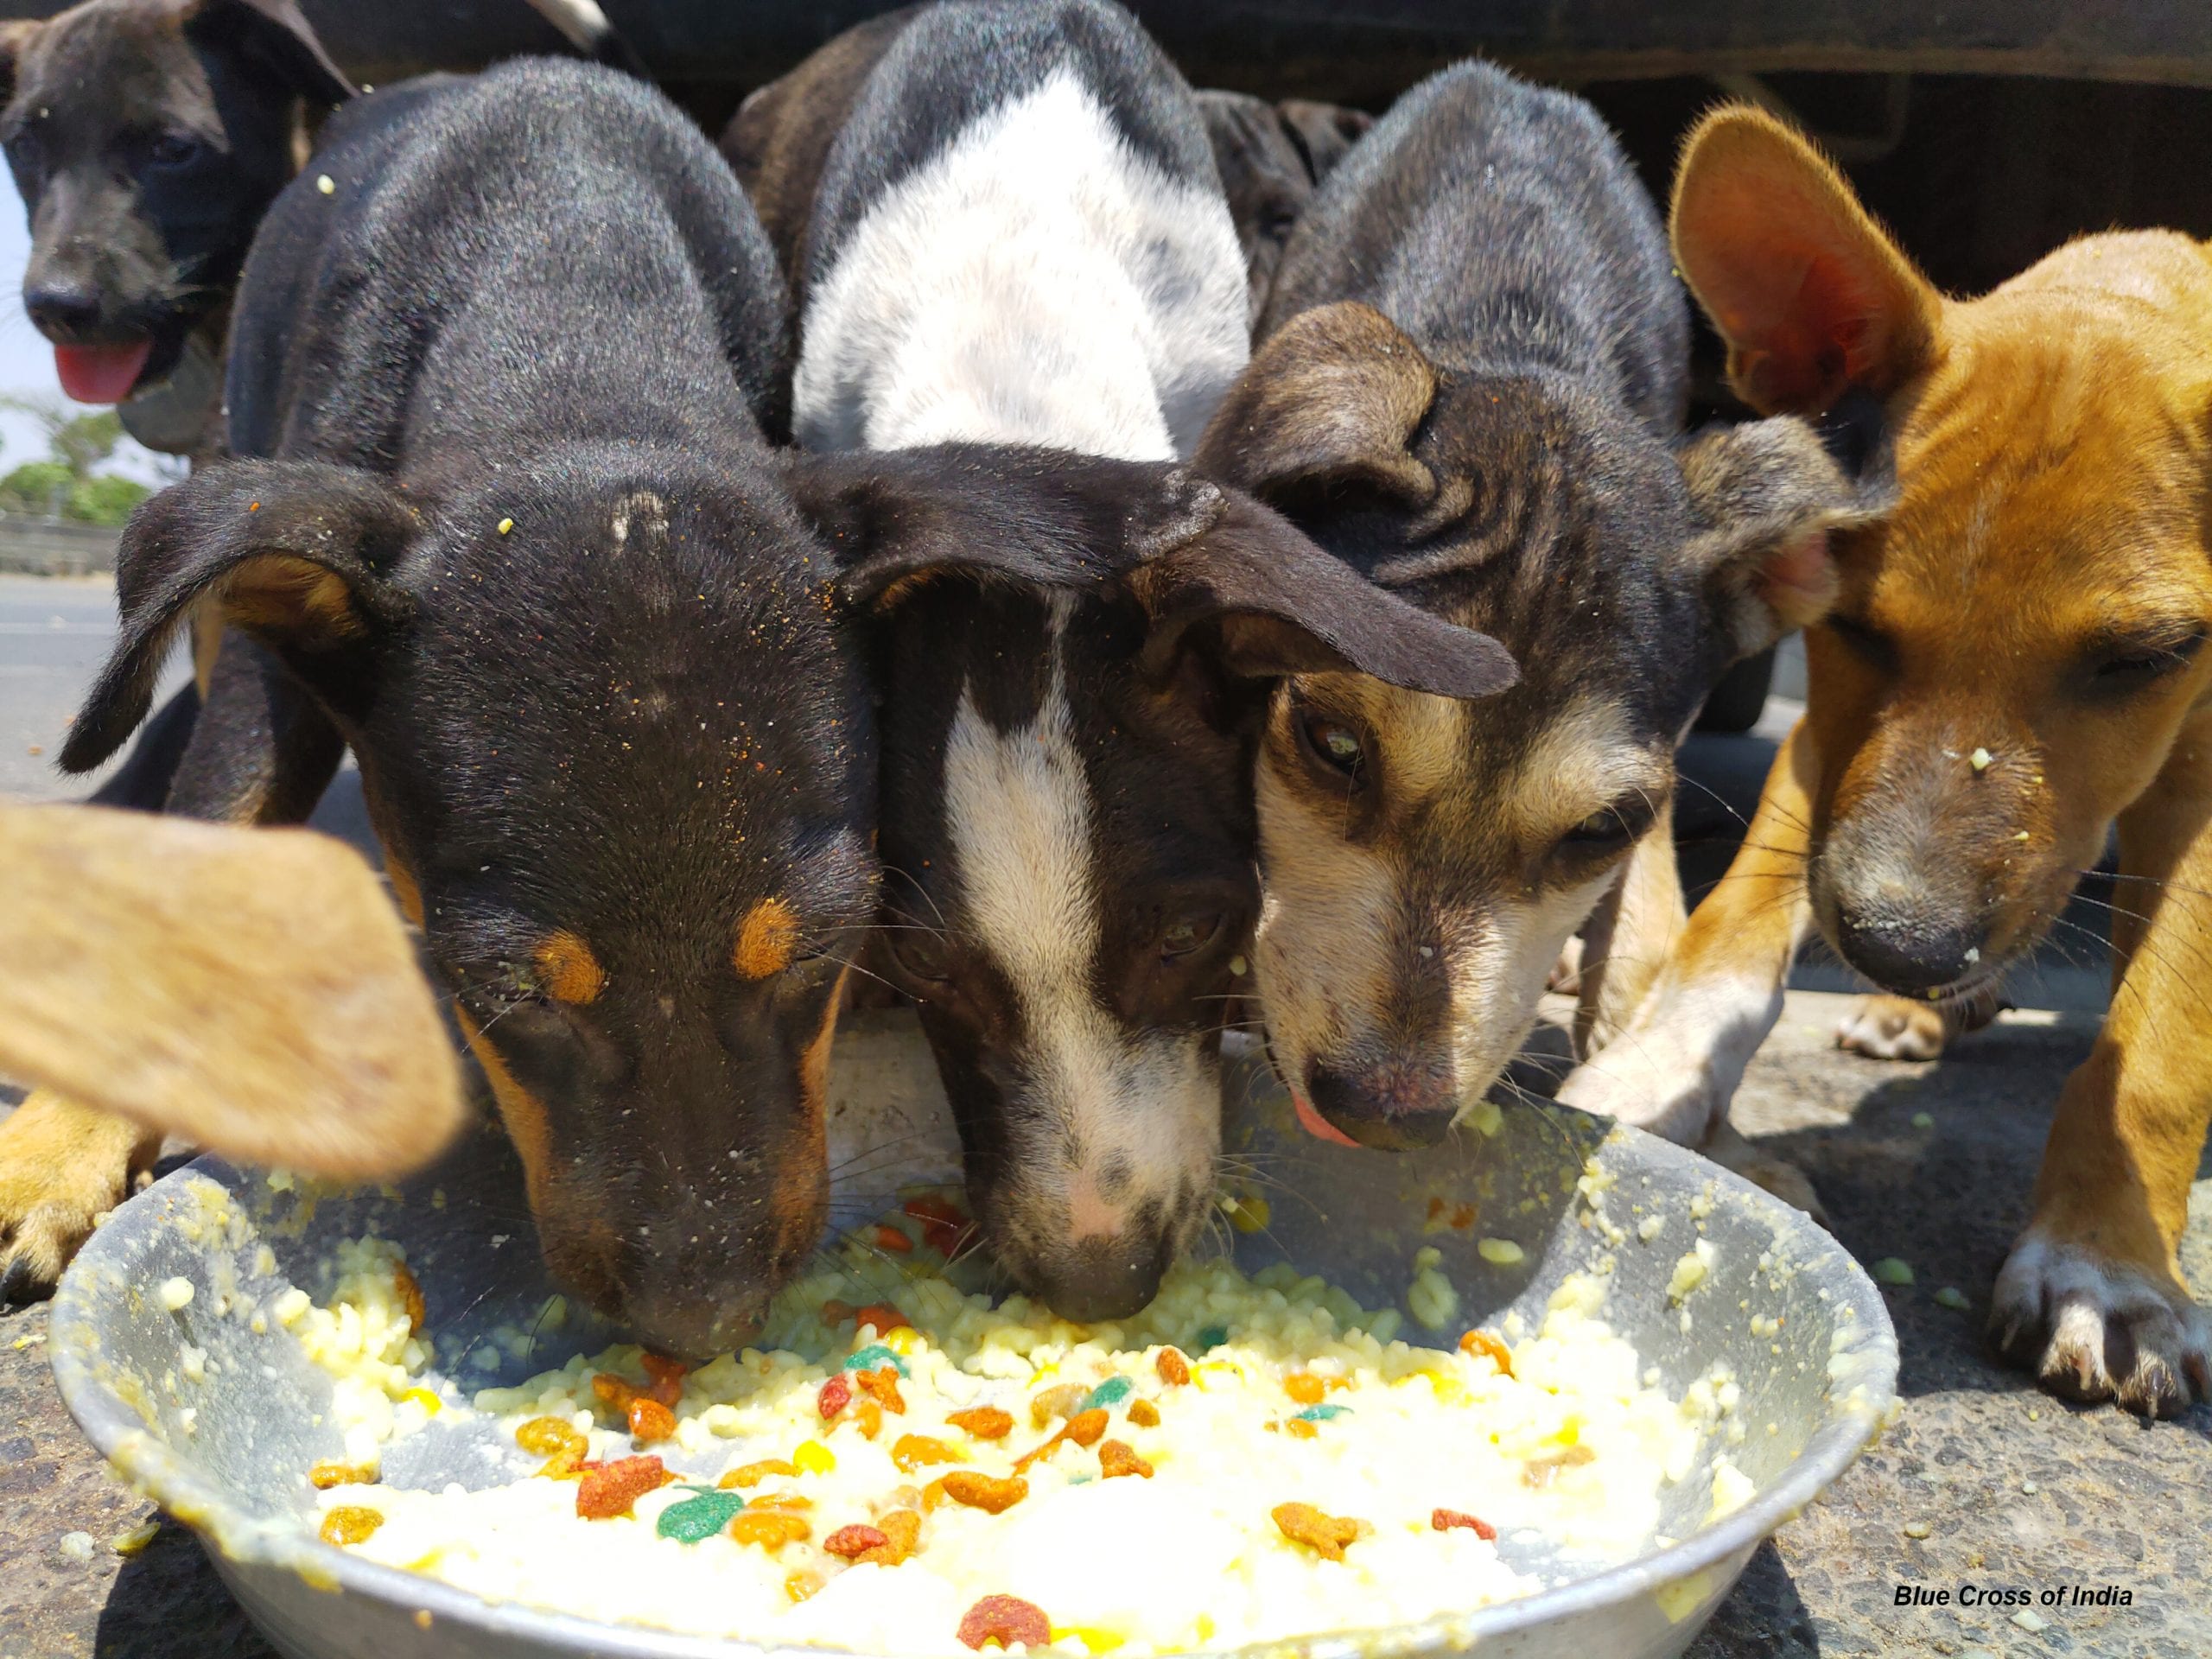 Karuna for Corona- Feeding the Street Dogs of Chennai